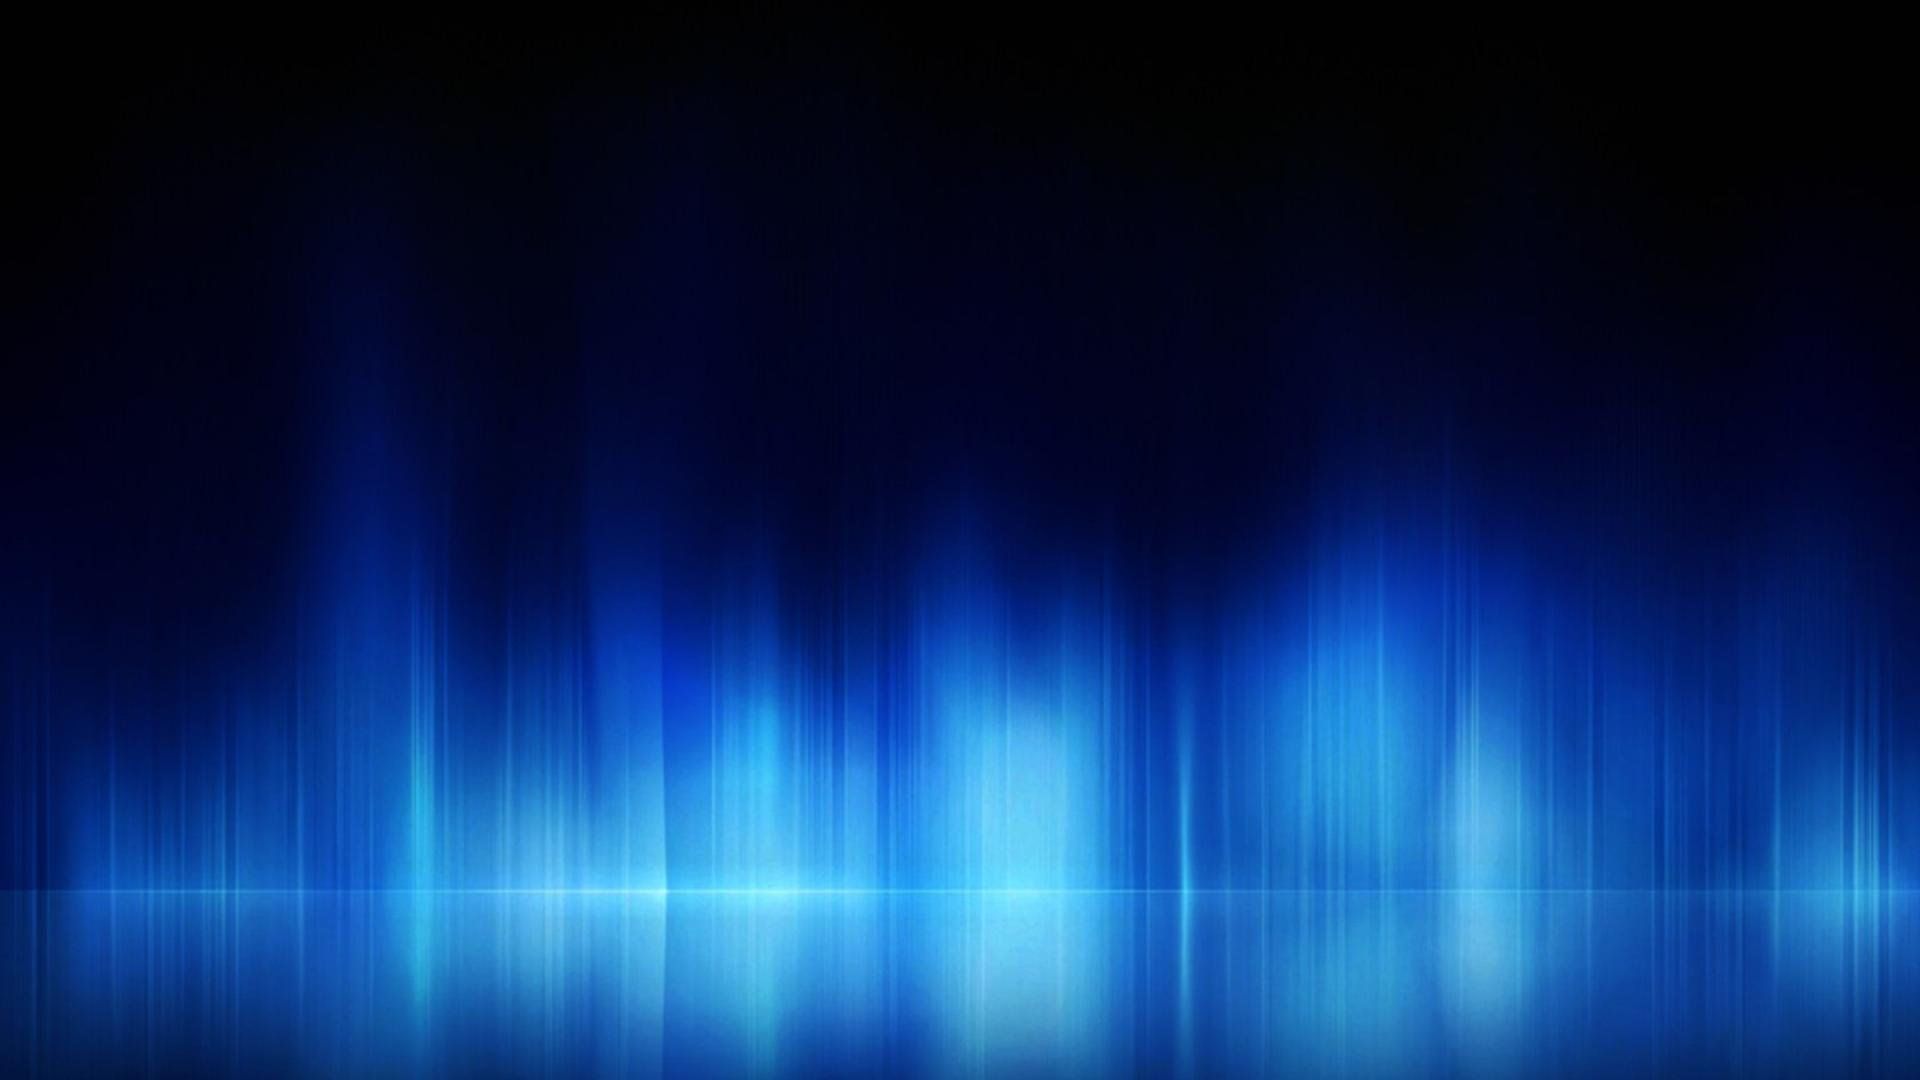 fondo de pantalla biru dongker,azul,negro,azul eléctrico,atmósfera,violeta